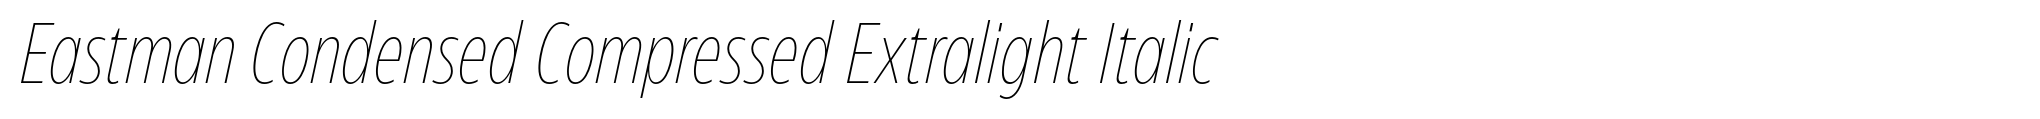 Eastman Condensed Compressed Extralight Italic image